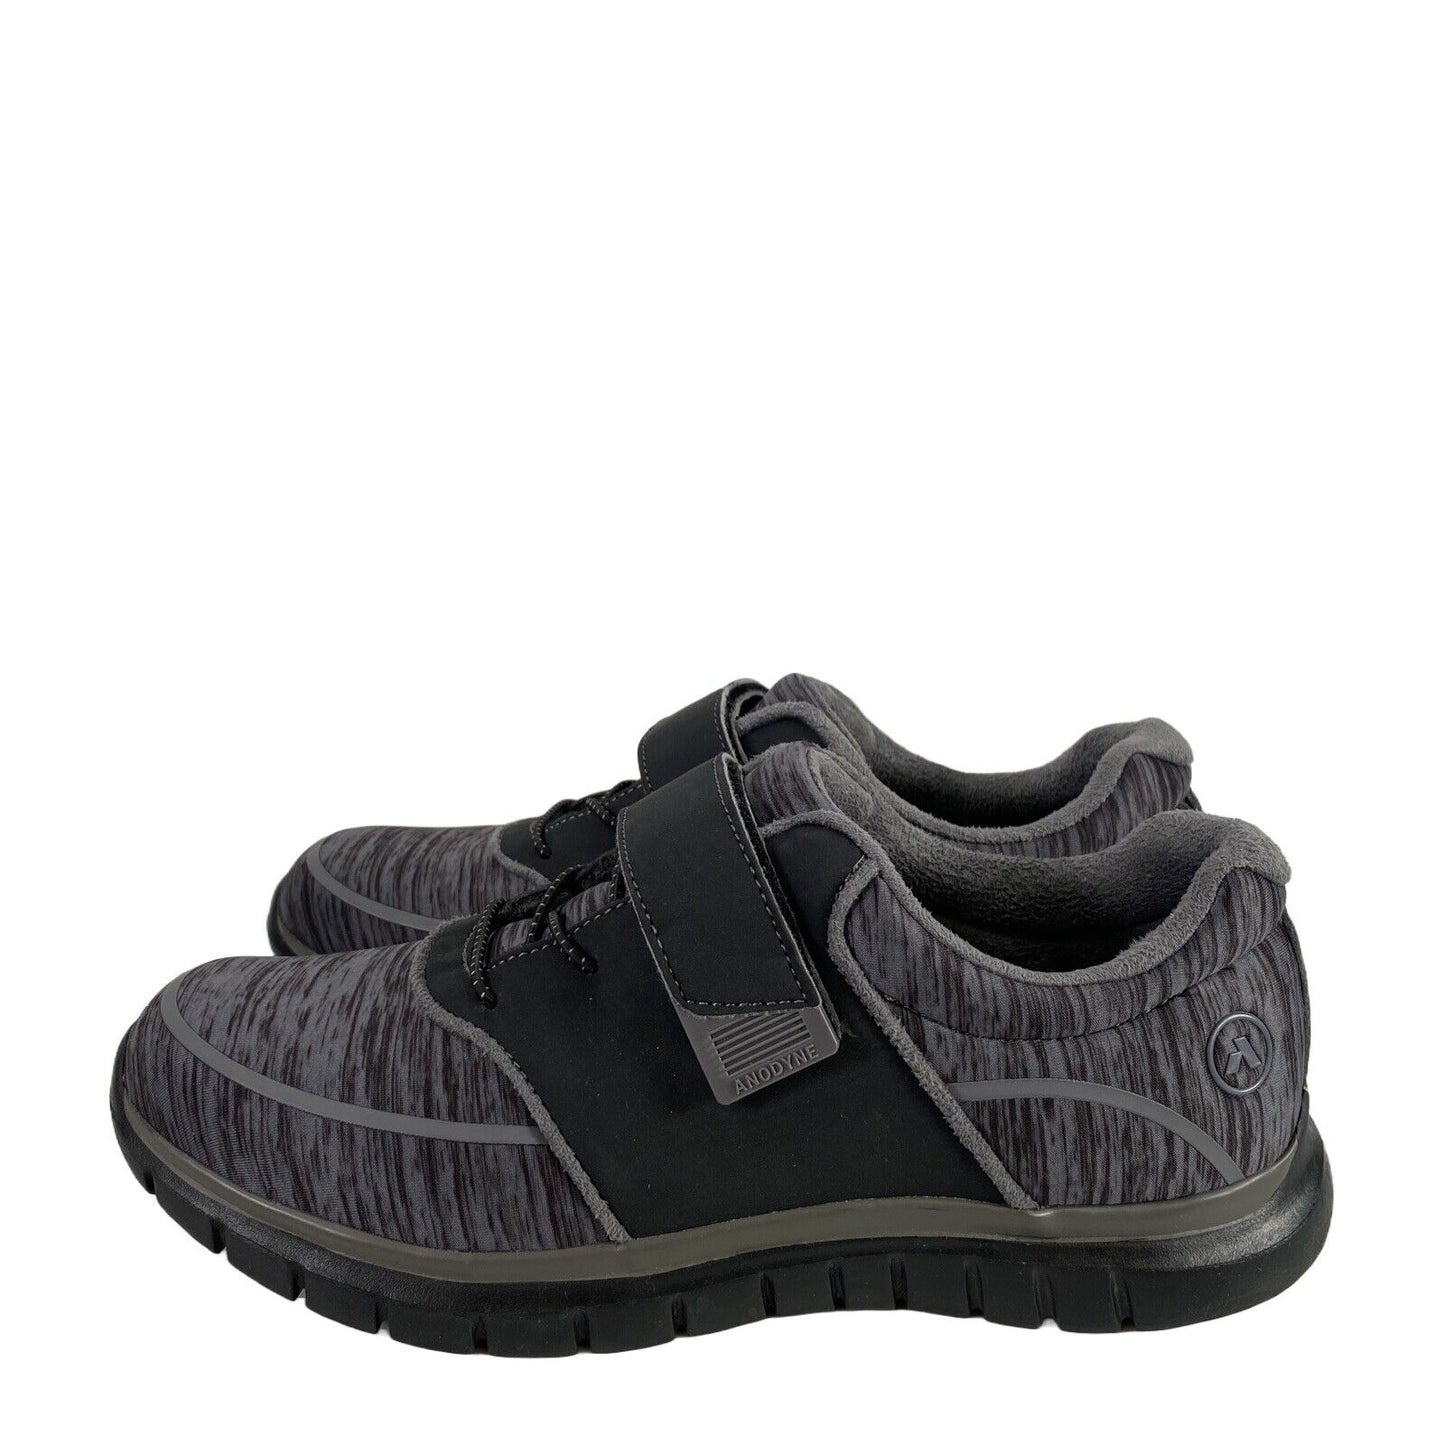 Anodyne Women's Black/Gray Sport Jogger Comfort Sneakers - 9.5M